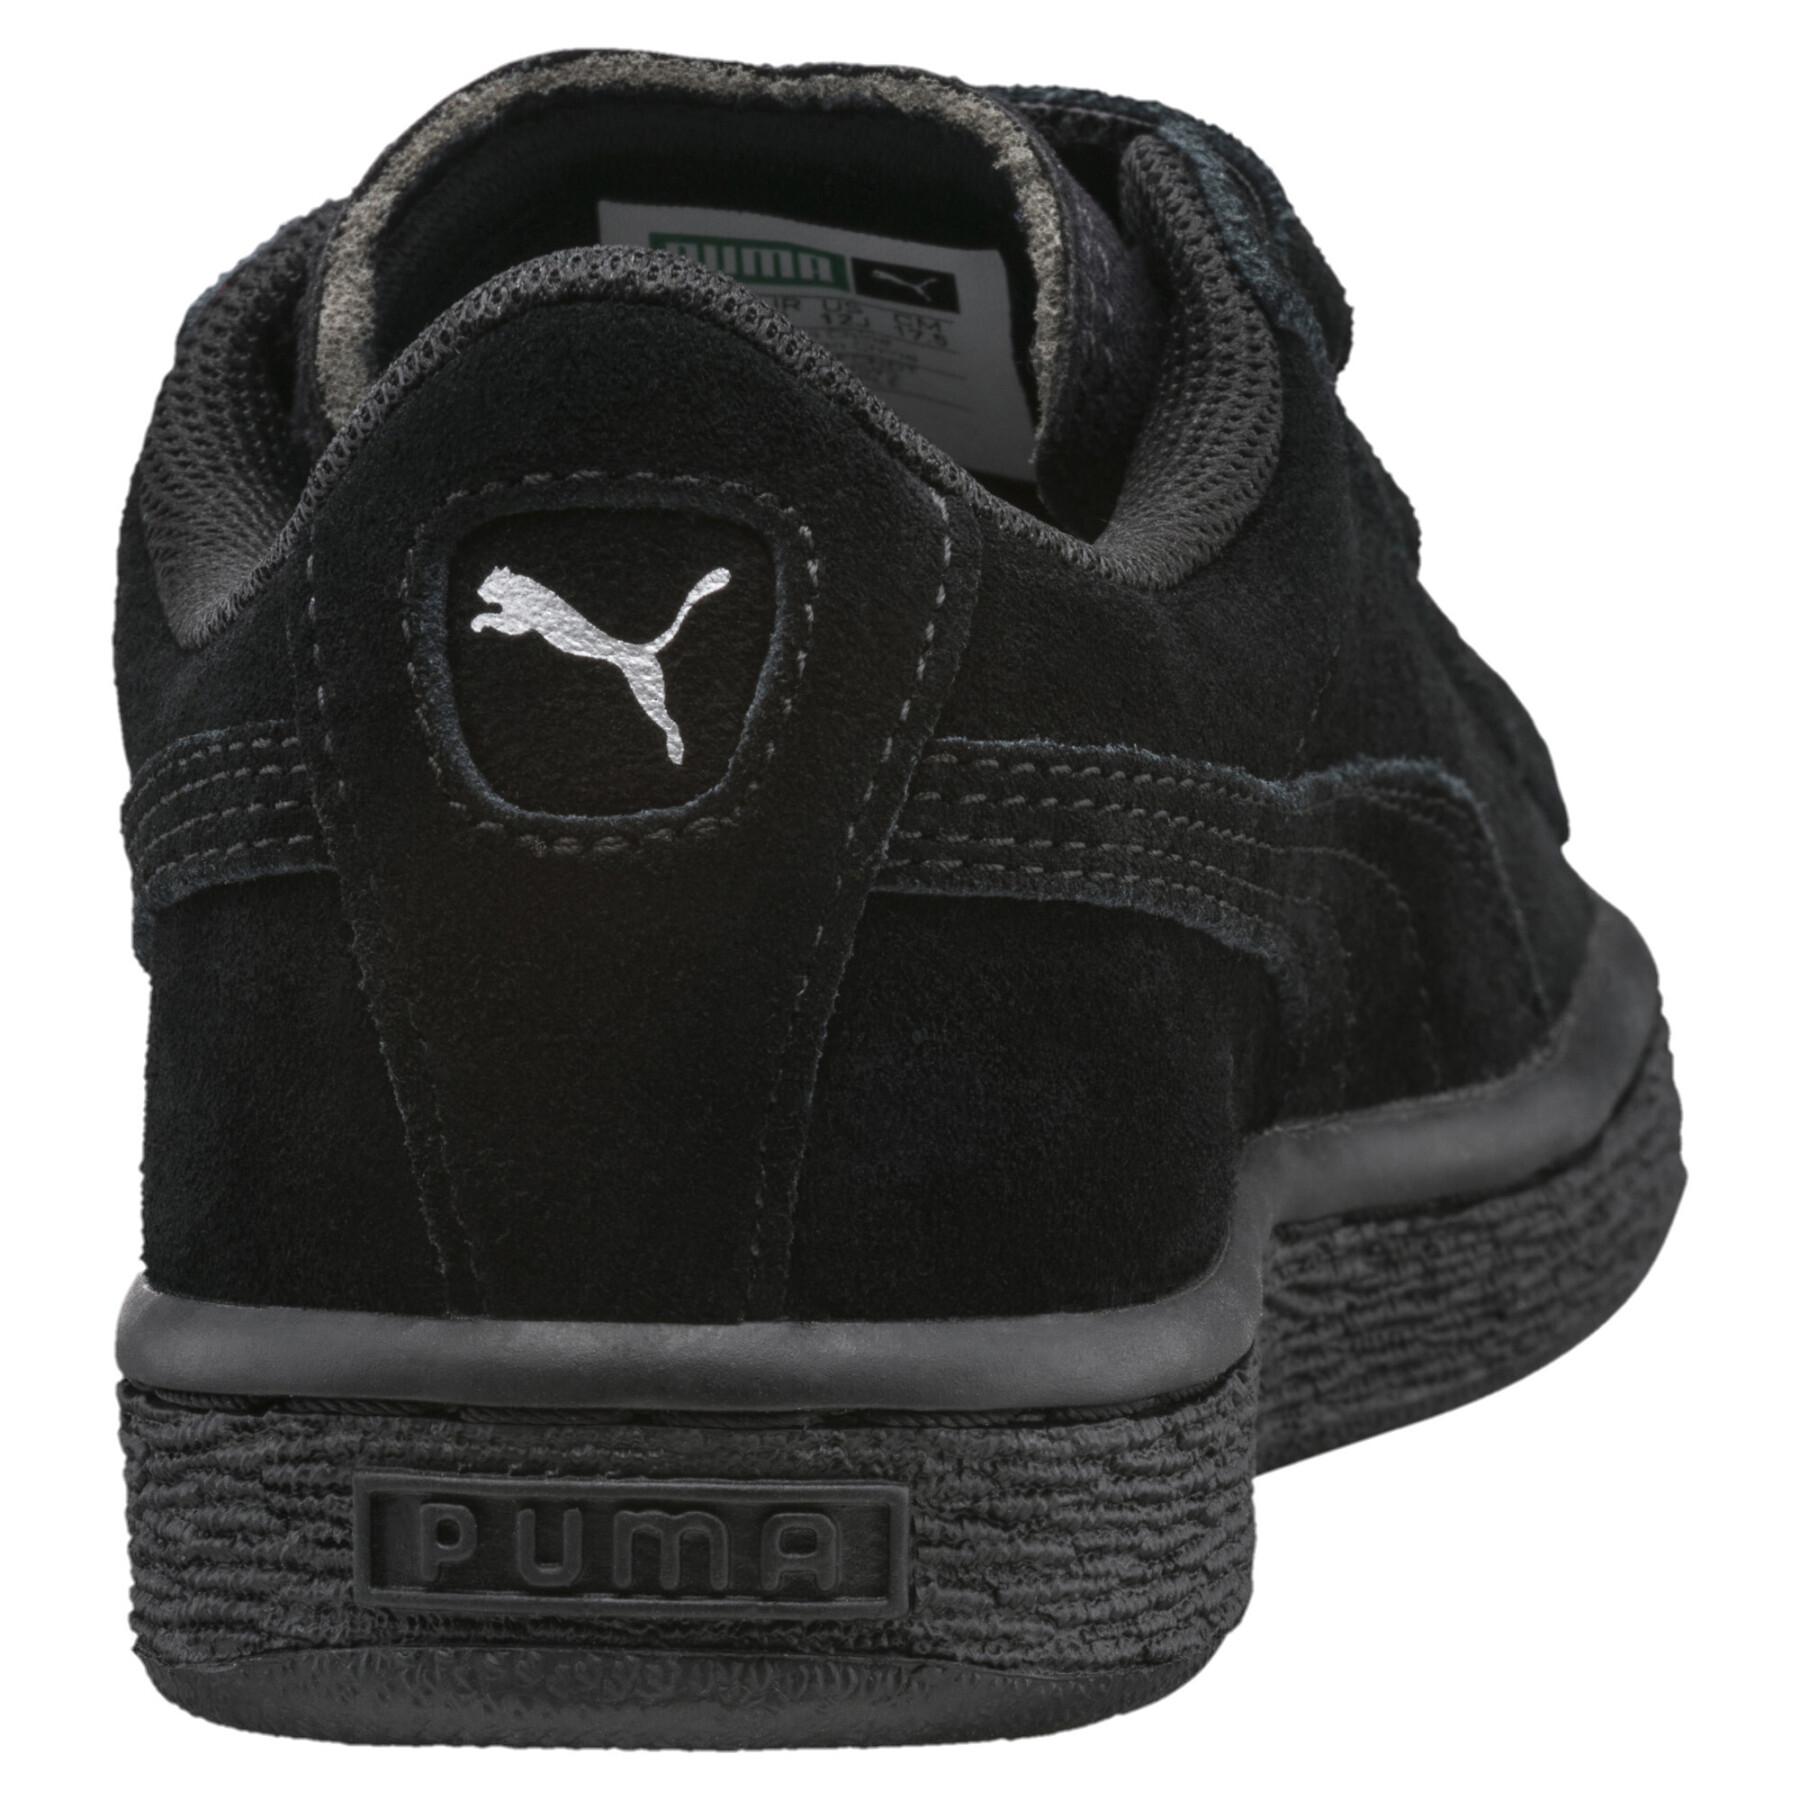 2-strap sneakers for children Puma Suede